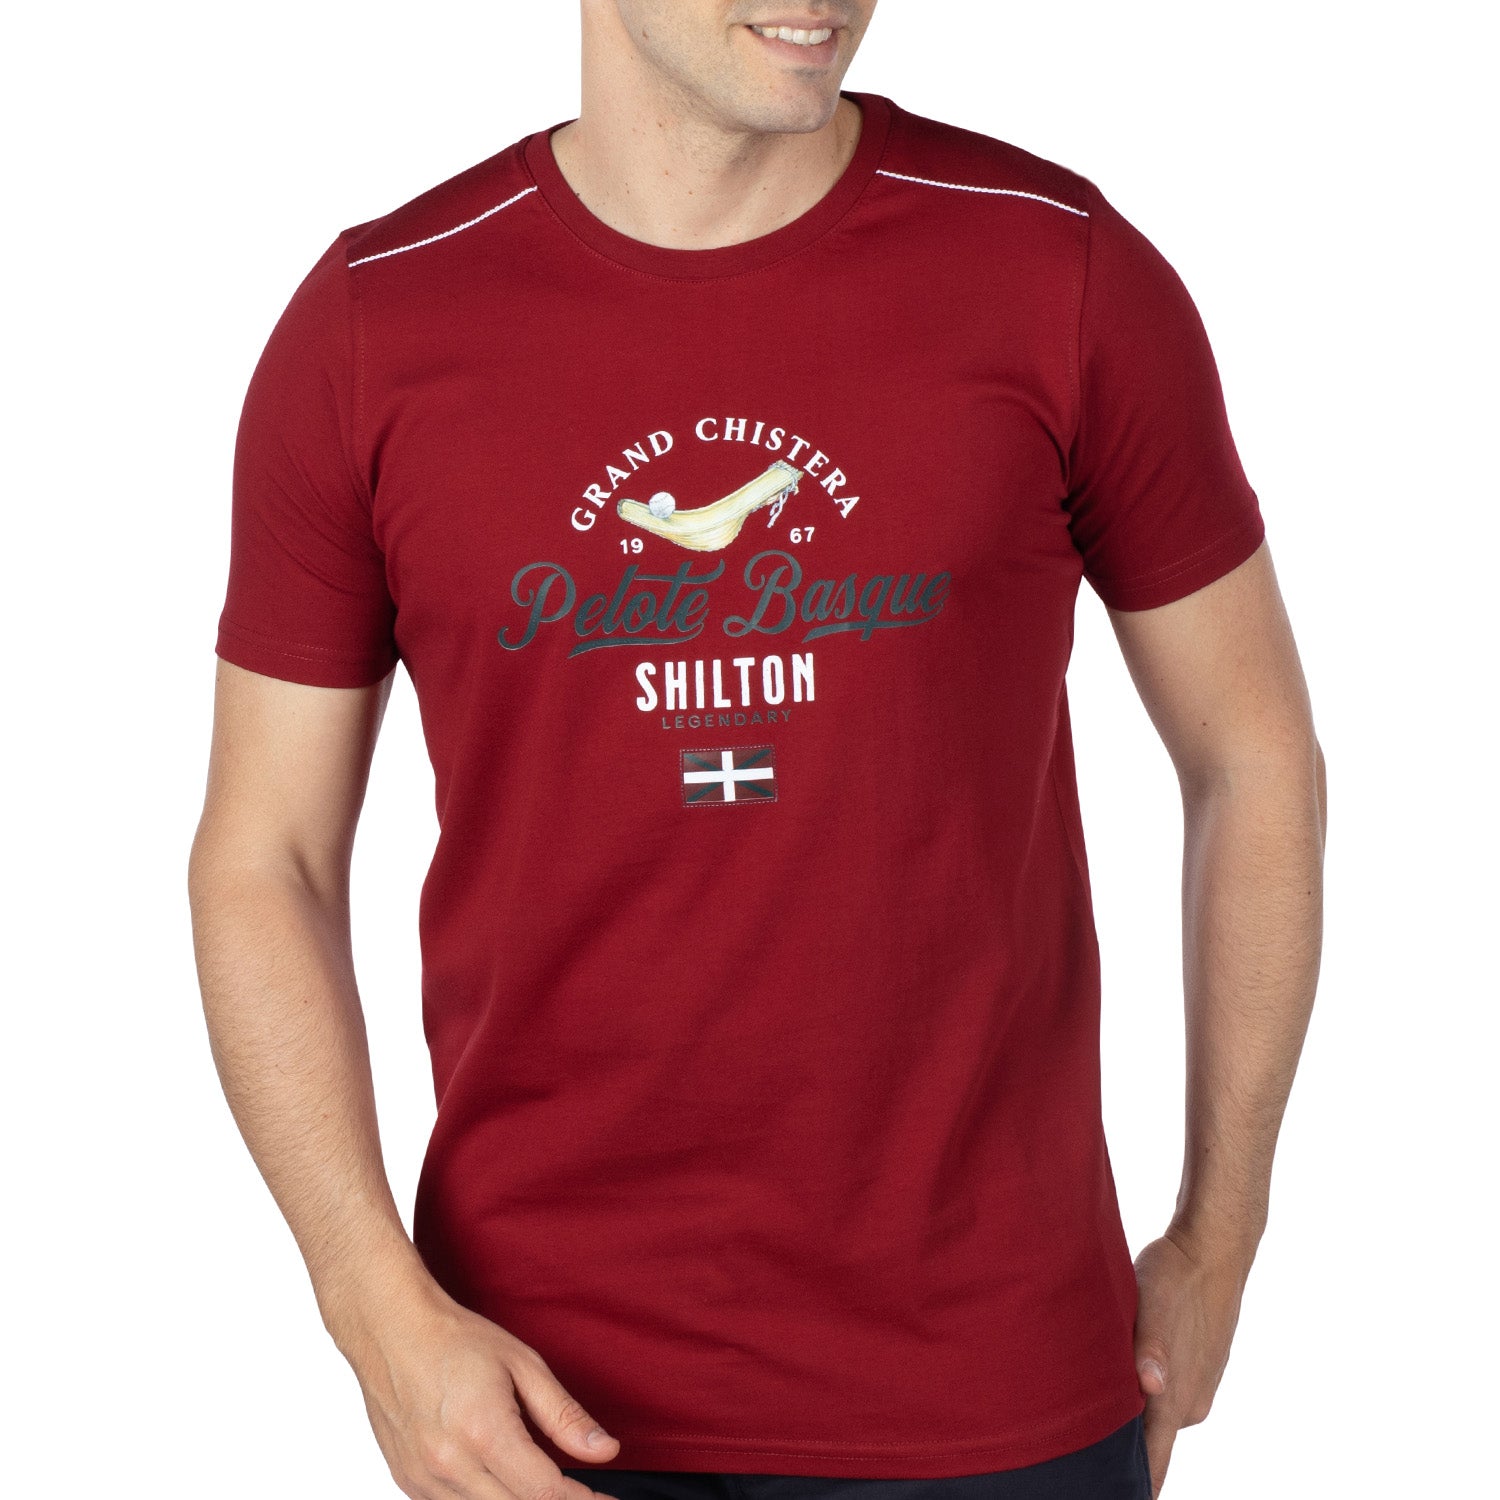 T-shirt pelote basque